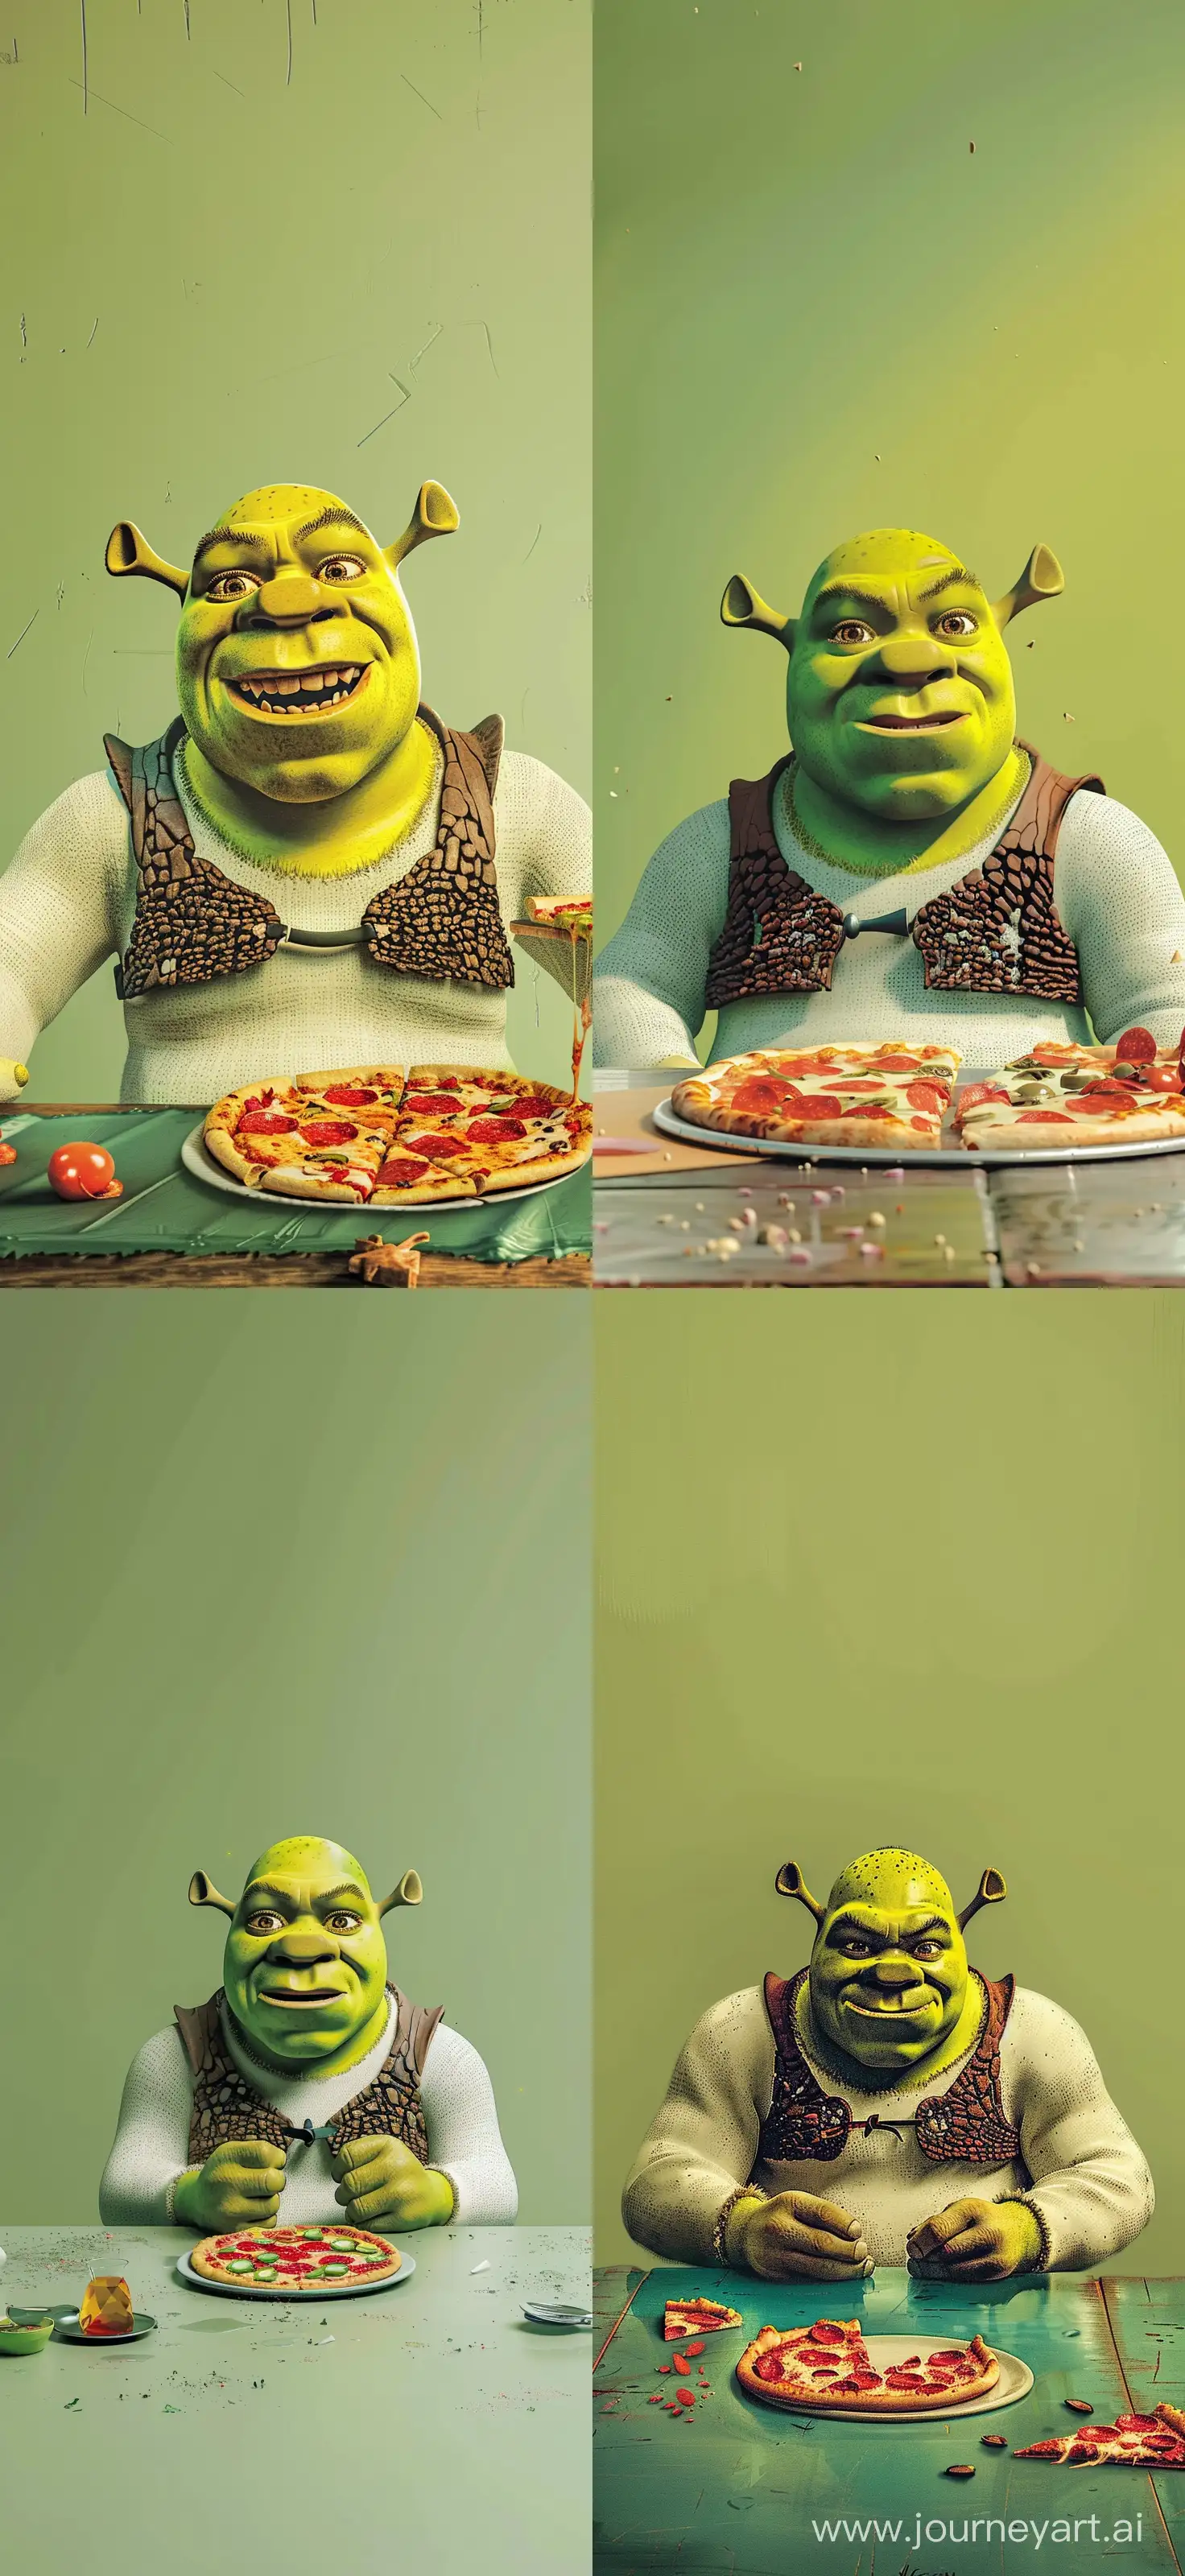 Minimalist-Illustration-Shrek-Enjoying-Pizza-at-the-Table